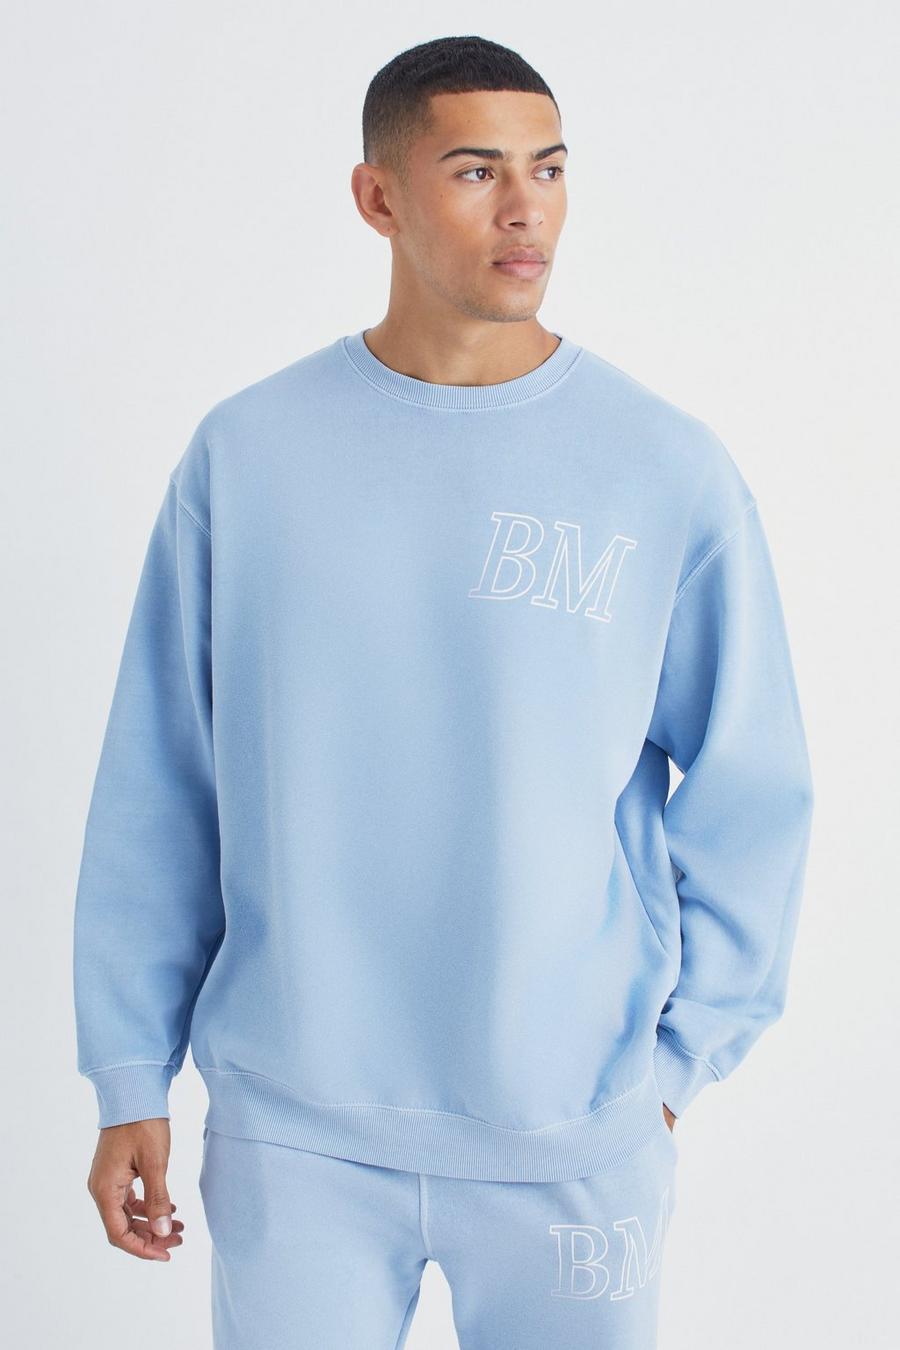 Blue Oversized Overdye Stencil Graphic Sweatshirt